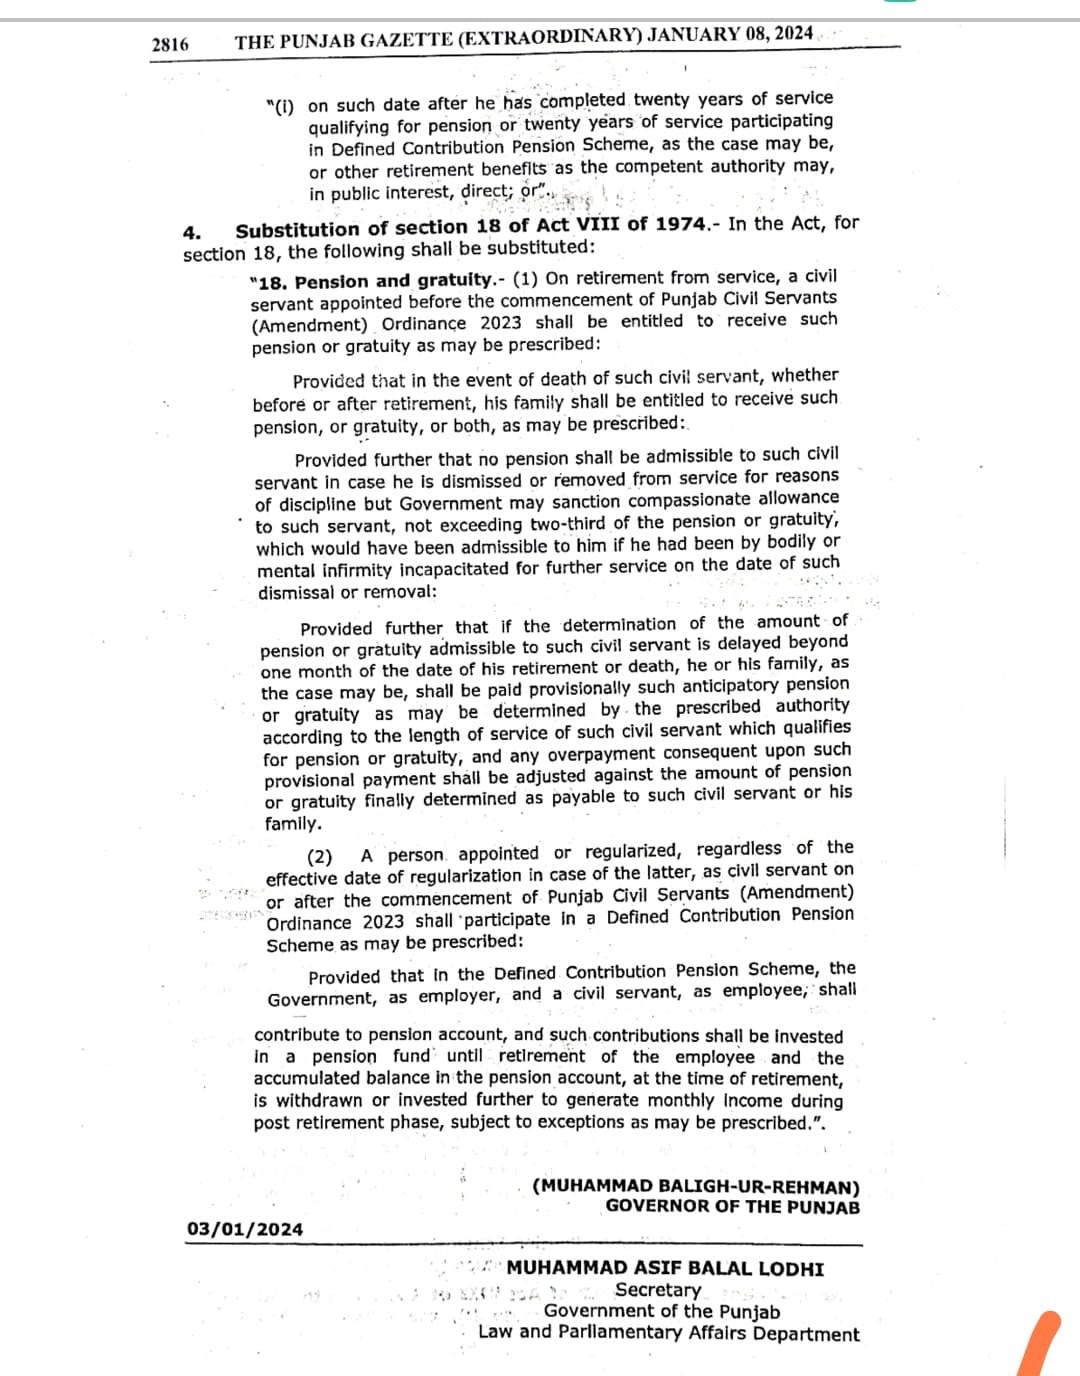 The Punjab Civil Servants (Amendment) Ordinance 2023